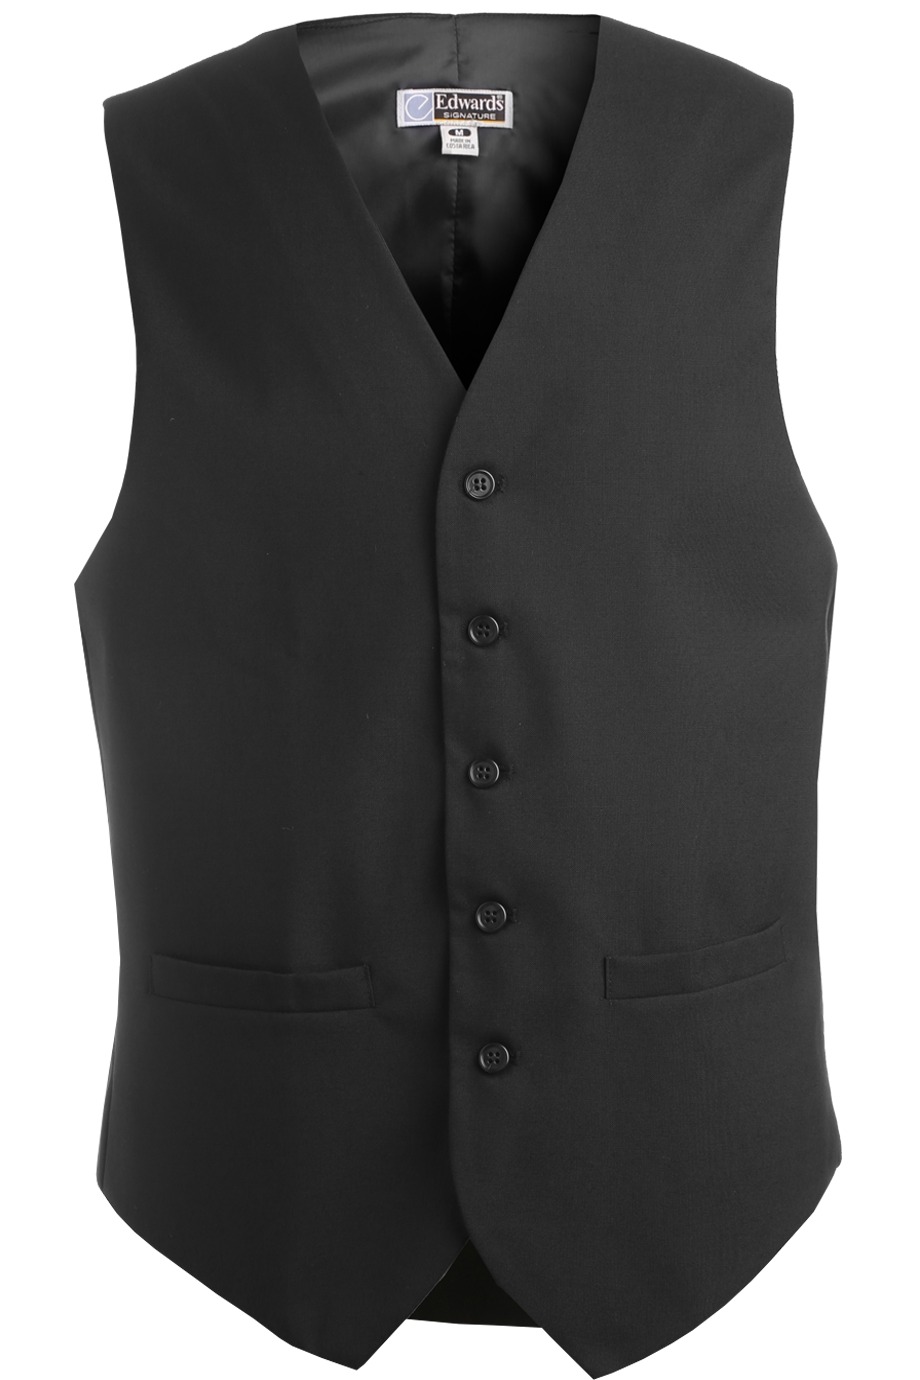 Edwards Garment 4680 - High Button Vest